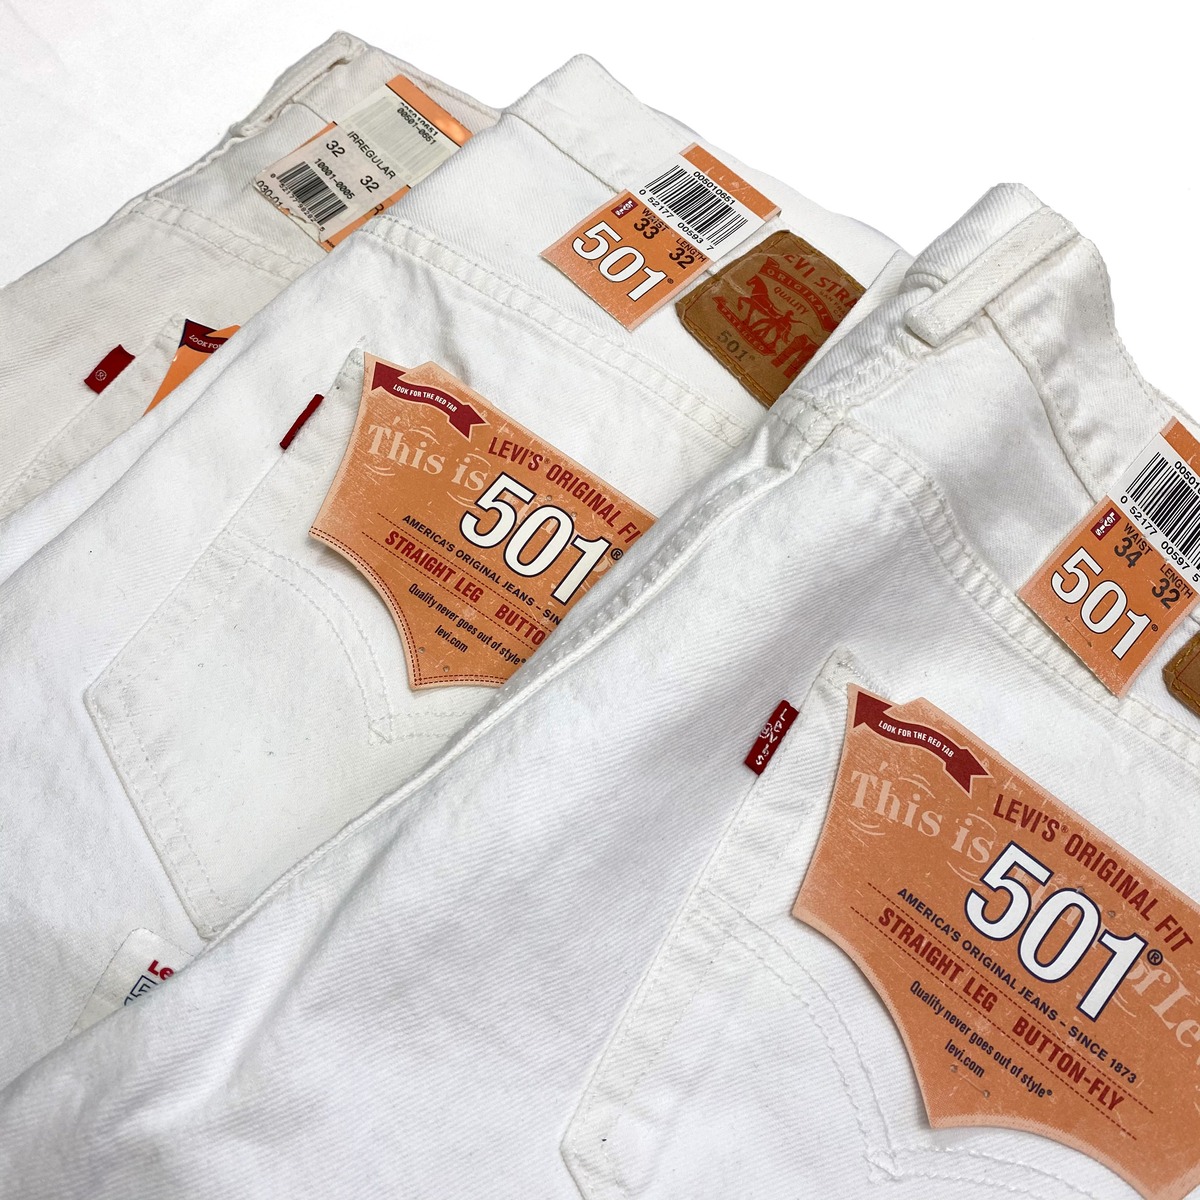 Levi's 501 Original Fit Jeans IRREGULAR "DEADSTOCK" / リーバイス デニム ジーンズ イレギュラー  デッドストック 古着 | WhiteHeadEagle